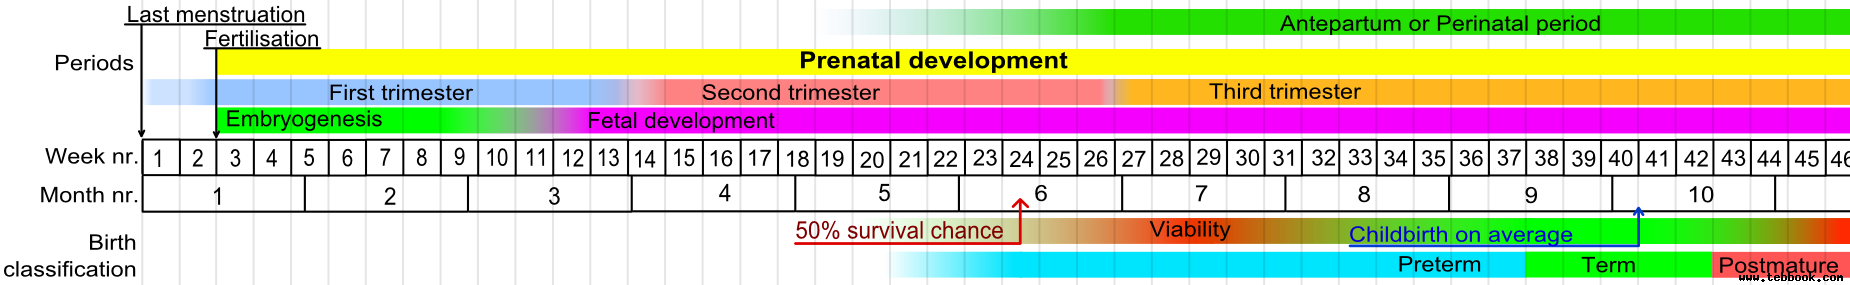 Prenatal_development_table